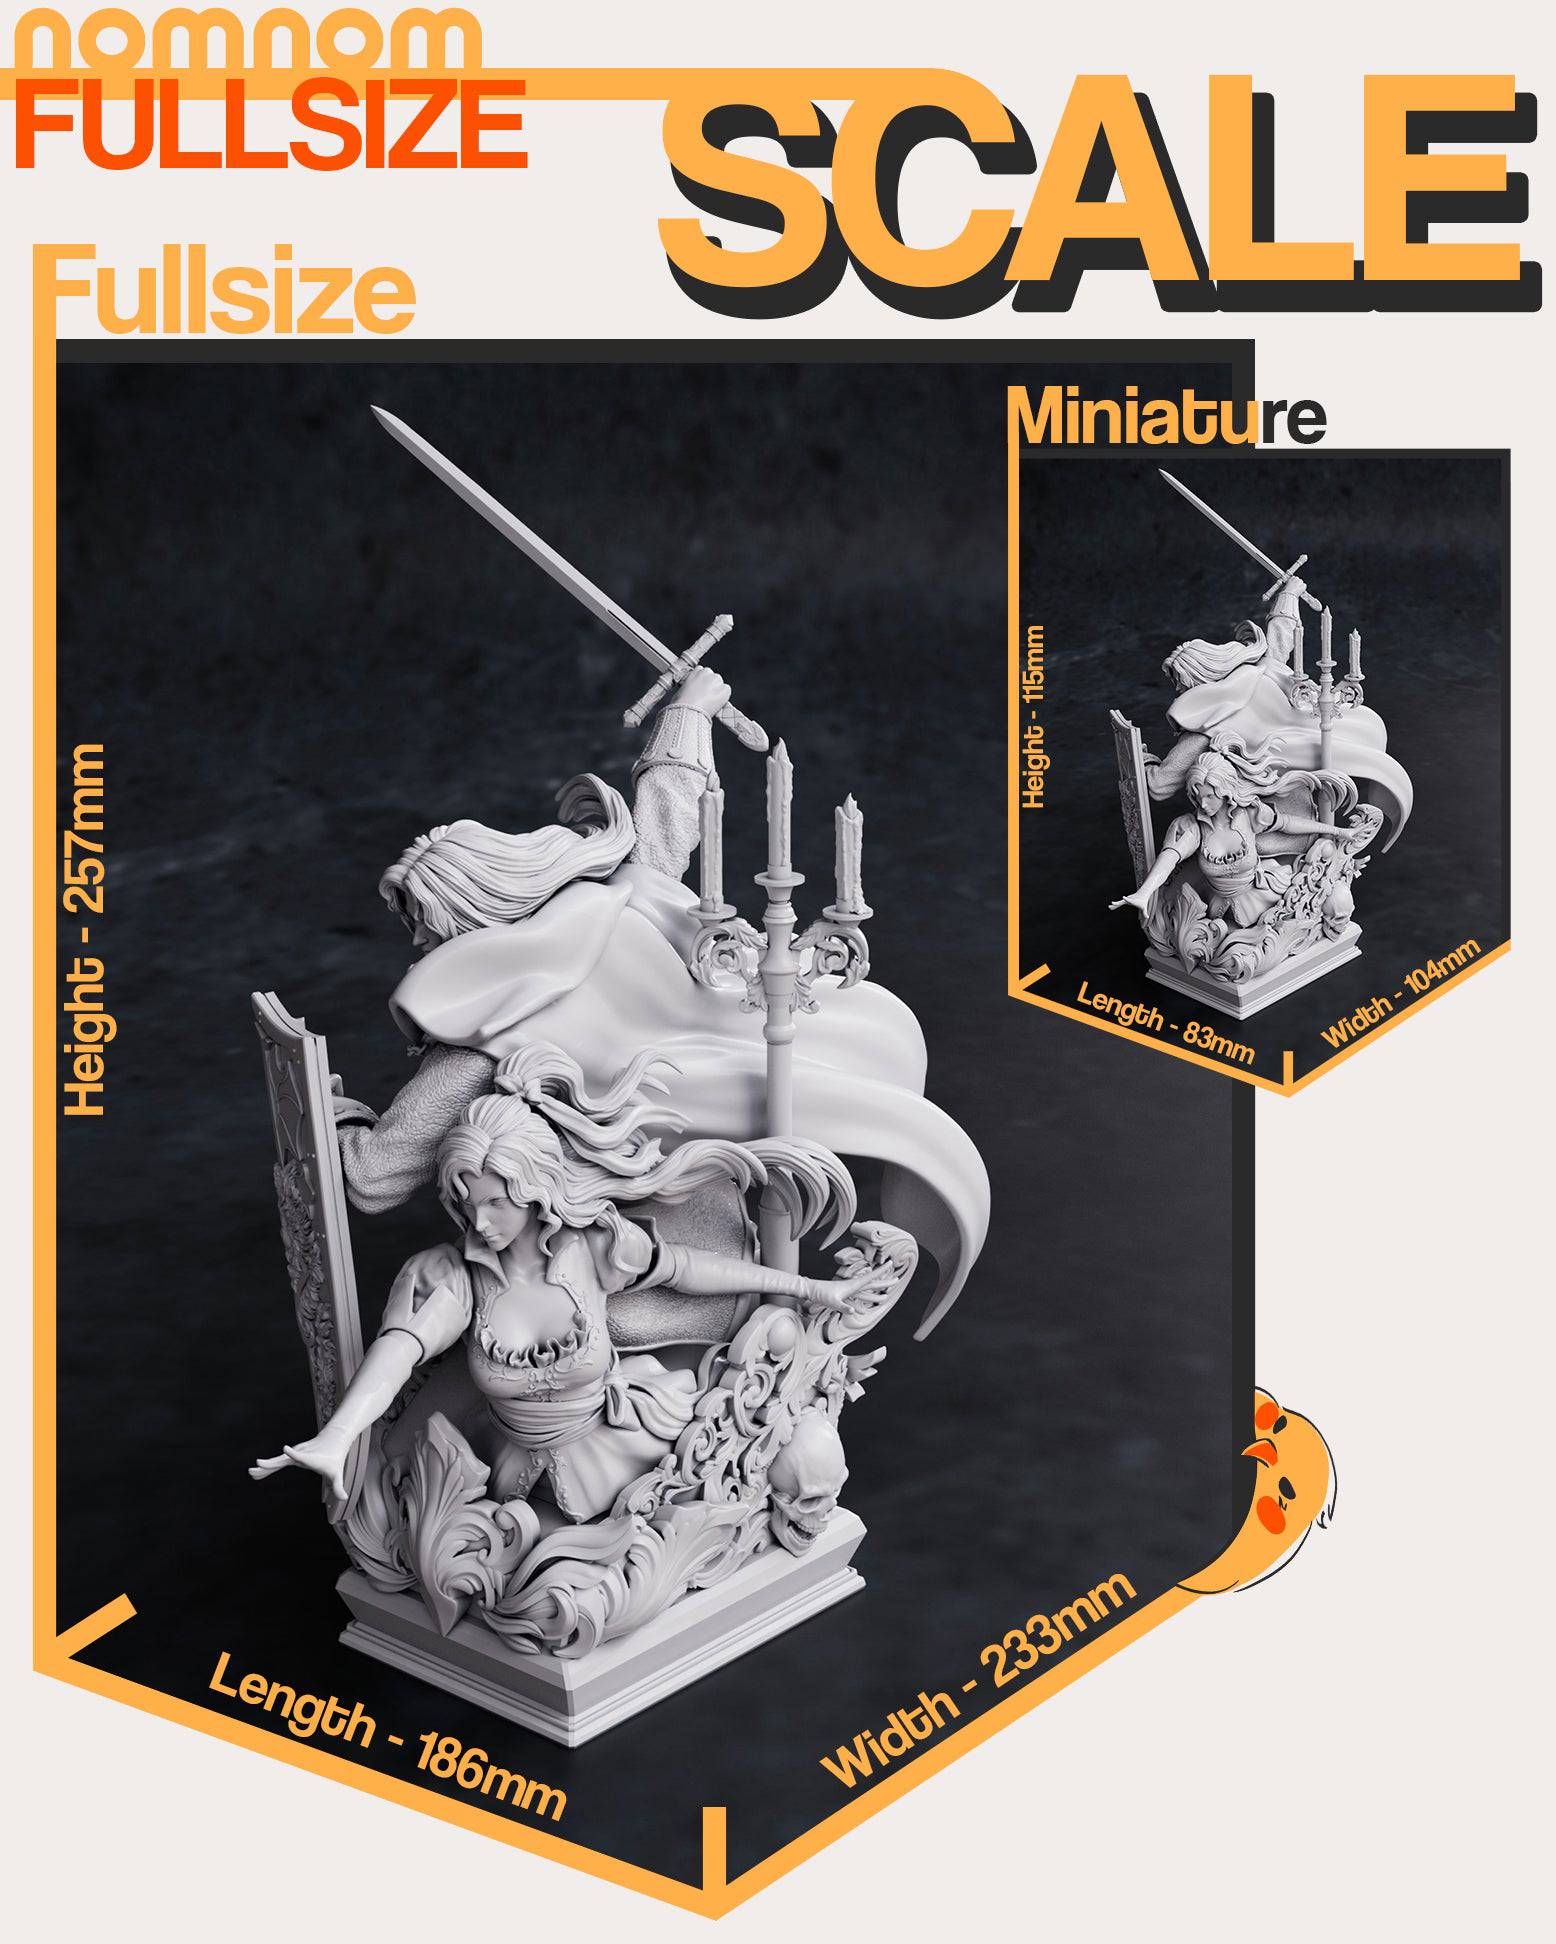 Midnight Harmony | Resin Garage Kit Sculpture Anime Video Game Fan Art Statue | Nomnom Figures - Tattles Told 3D